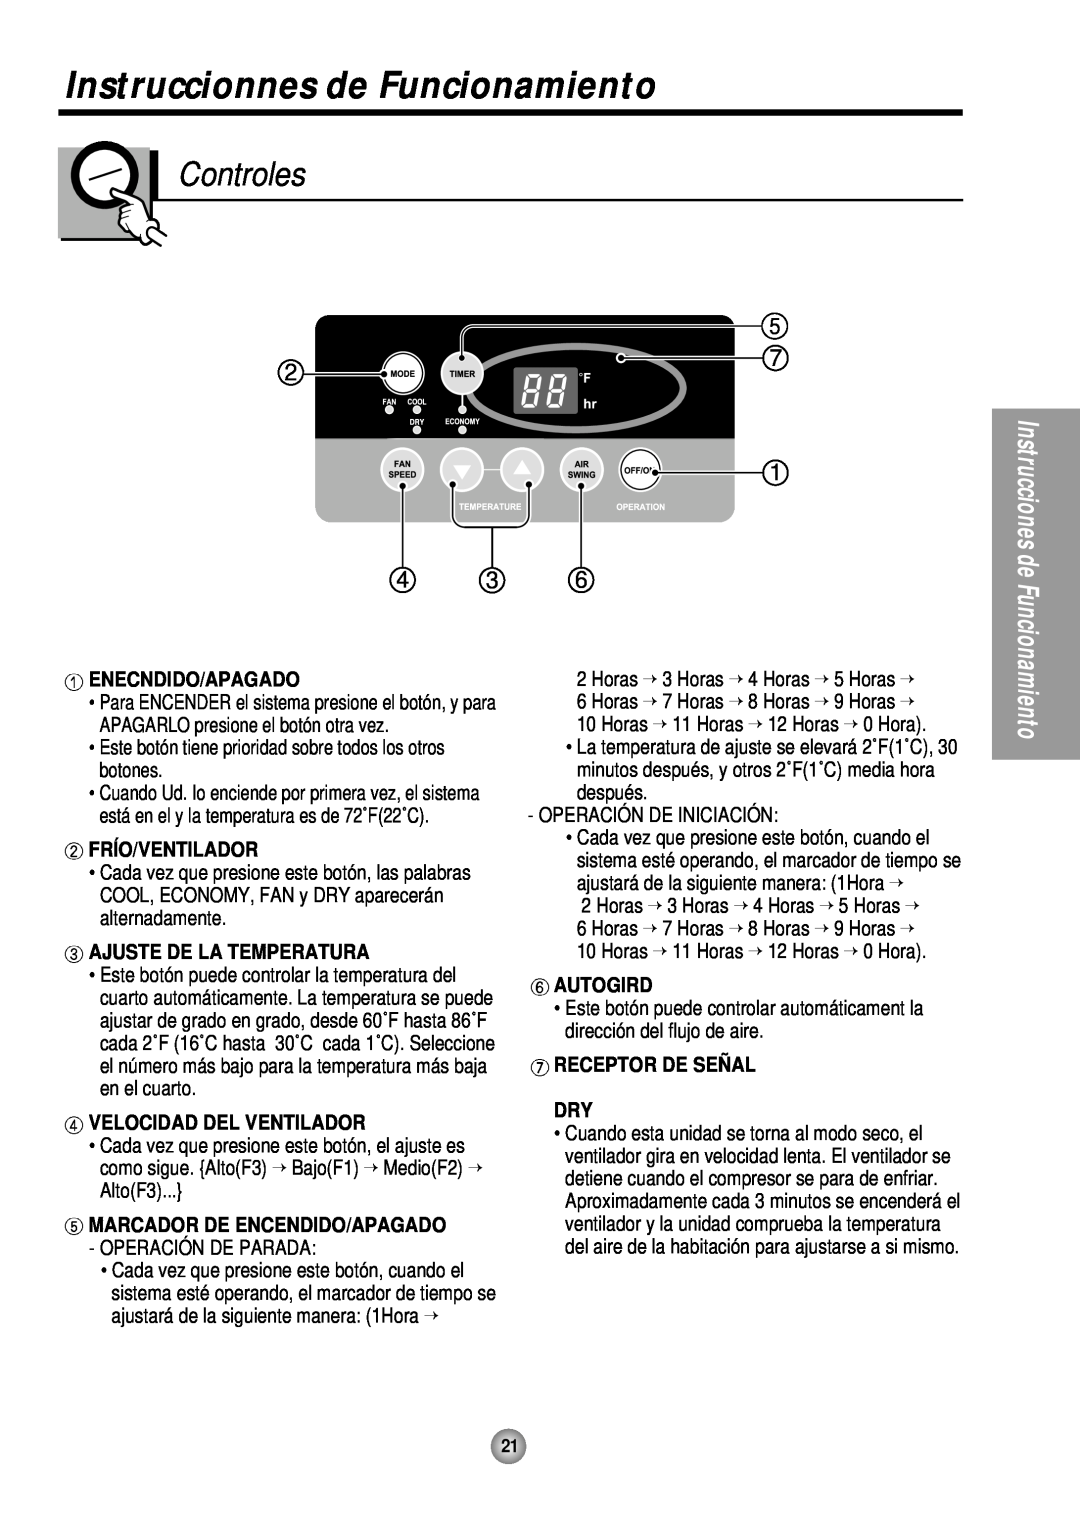 Panasonic CW-XC145HU, CW-XC185HU Instruccionnes de Funcionamiento, Controles, Enecndido/Apagado, Frío/Ventilador, Autogird 